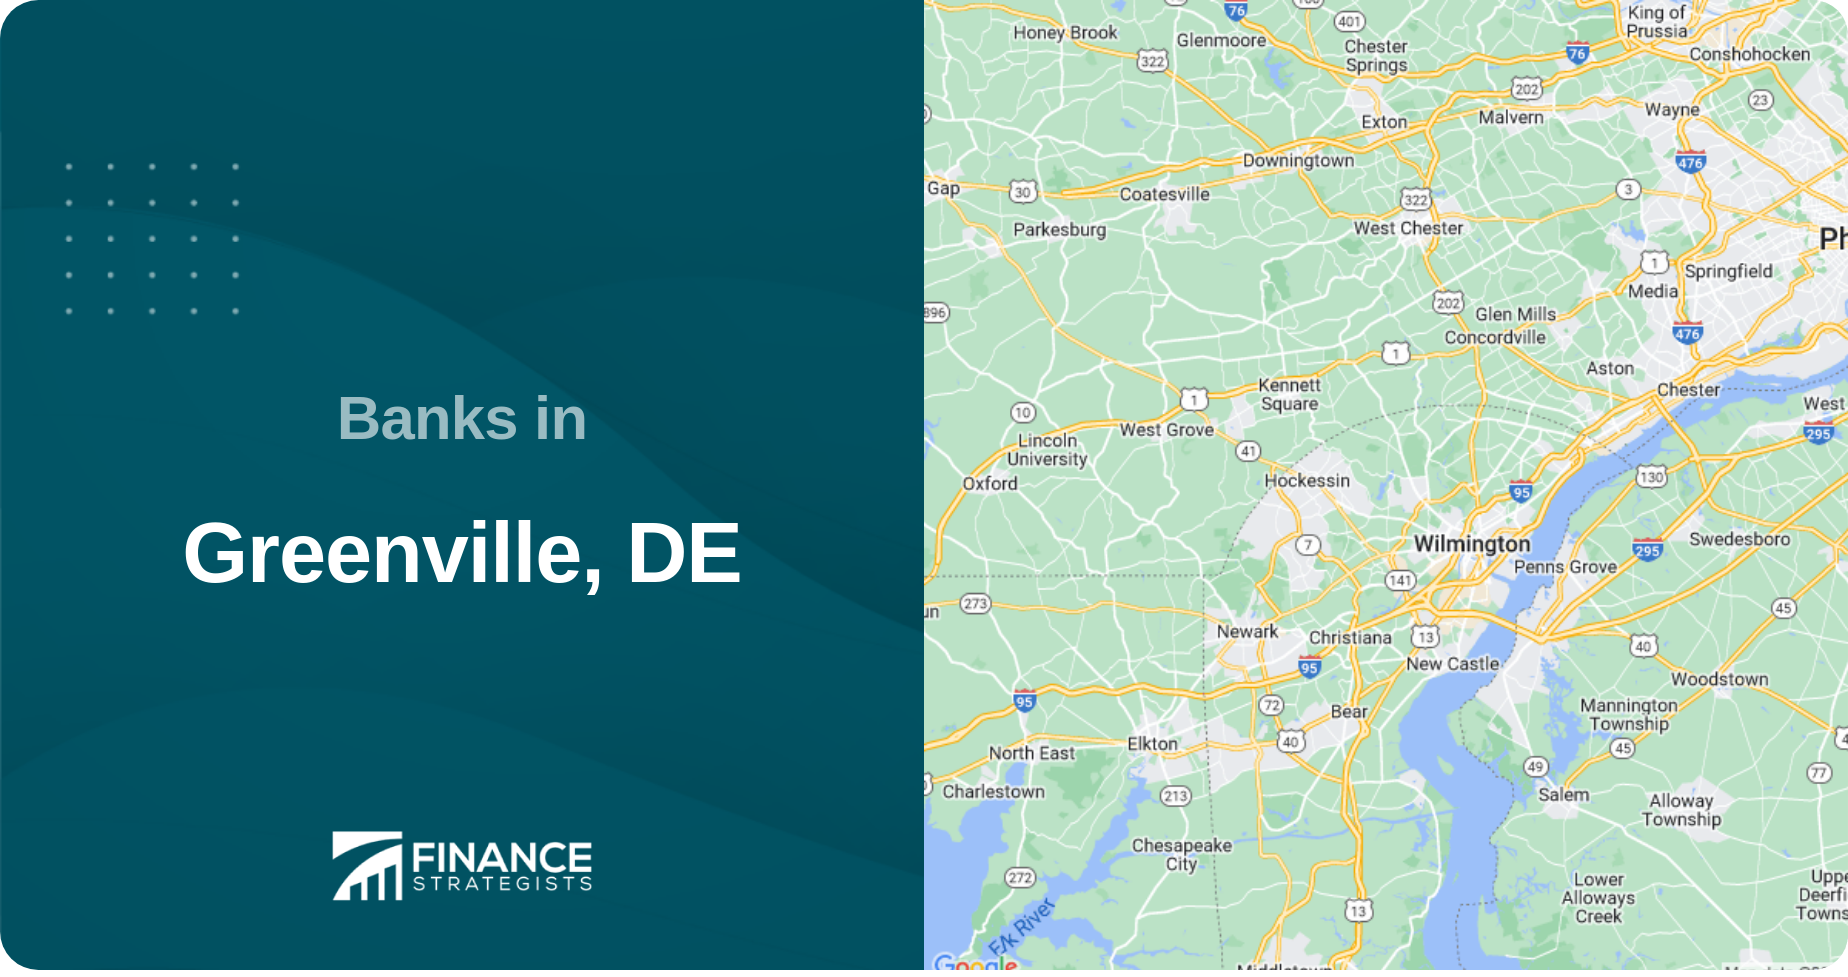 Banks in Greenville, DE